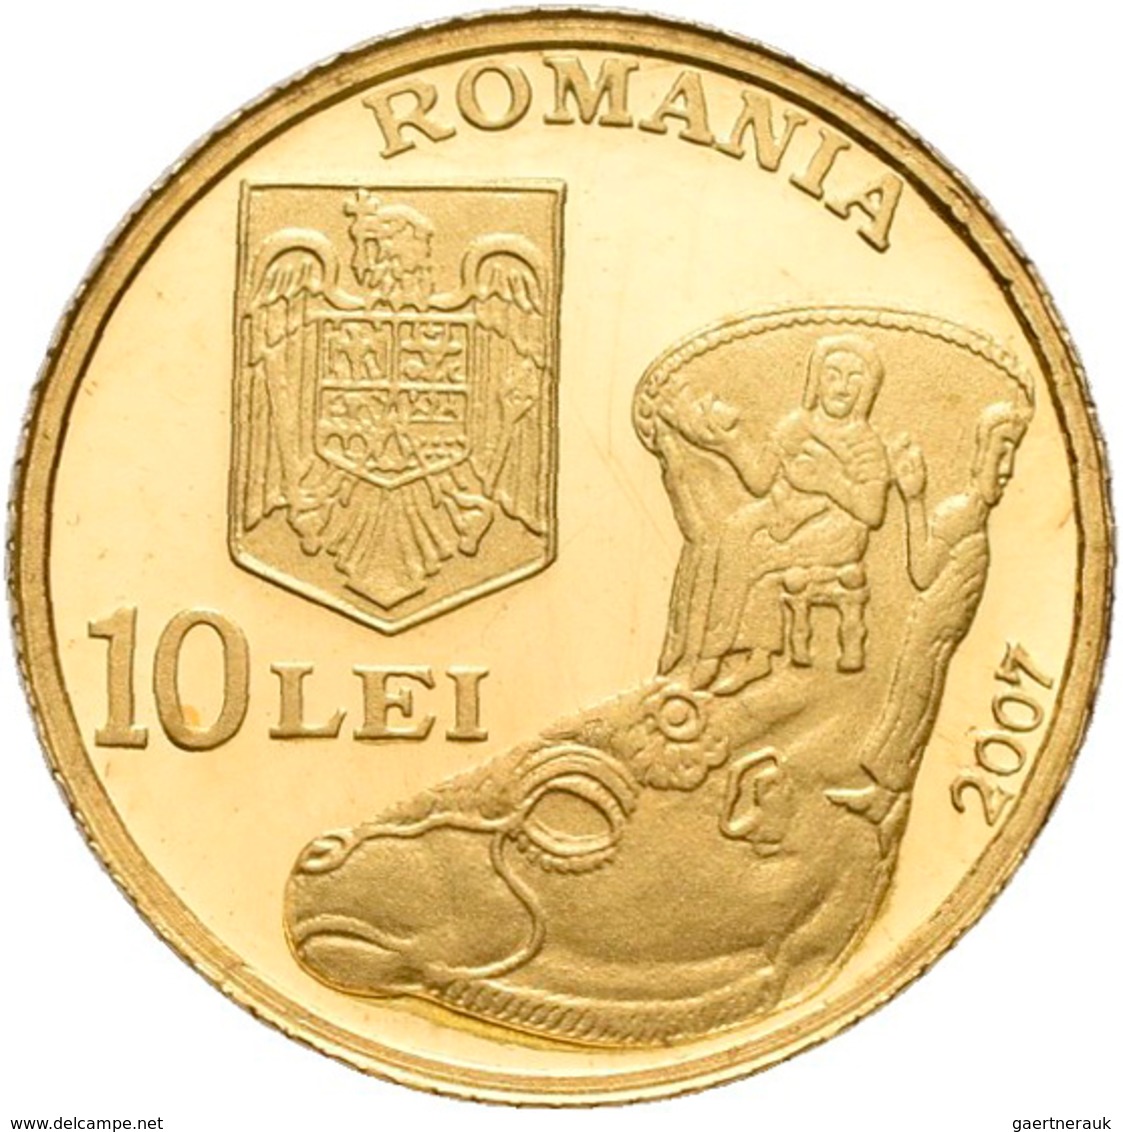 Rumänien: 10 Lei 2007, The Rhyton Of Poroina (Trinkhorn). KM# 288. 1,224 G, 999/1000 Gold. Auflage N - Romania